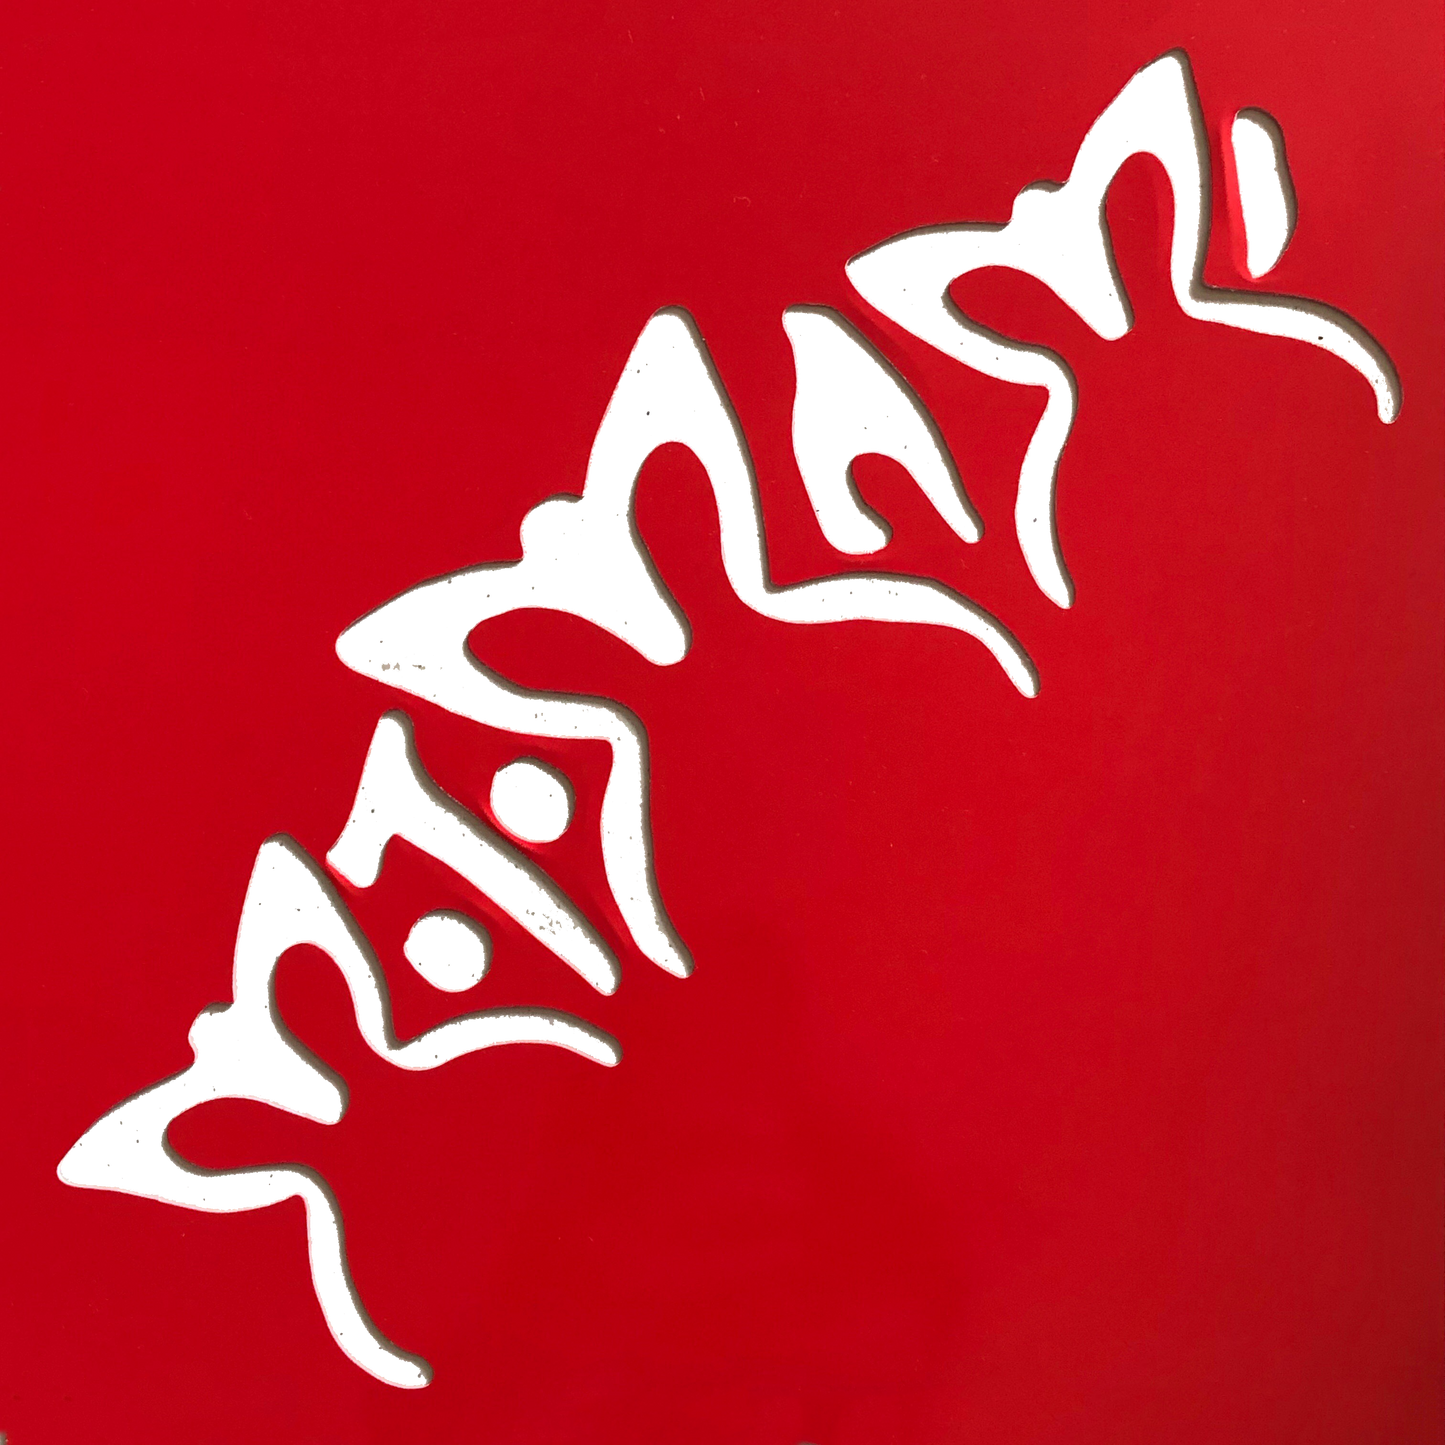 MOTOMAMI (Limited Edition Translucent Red Vinyl + Exclusive Graffiti Stencil)